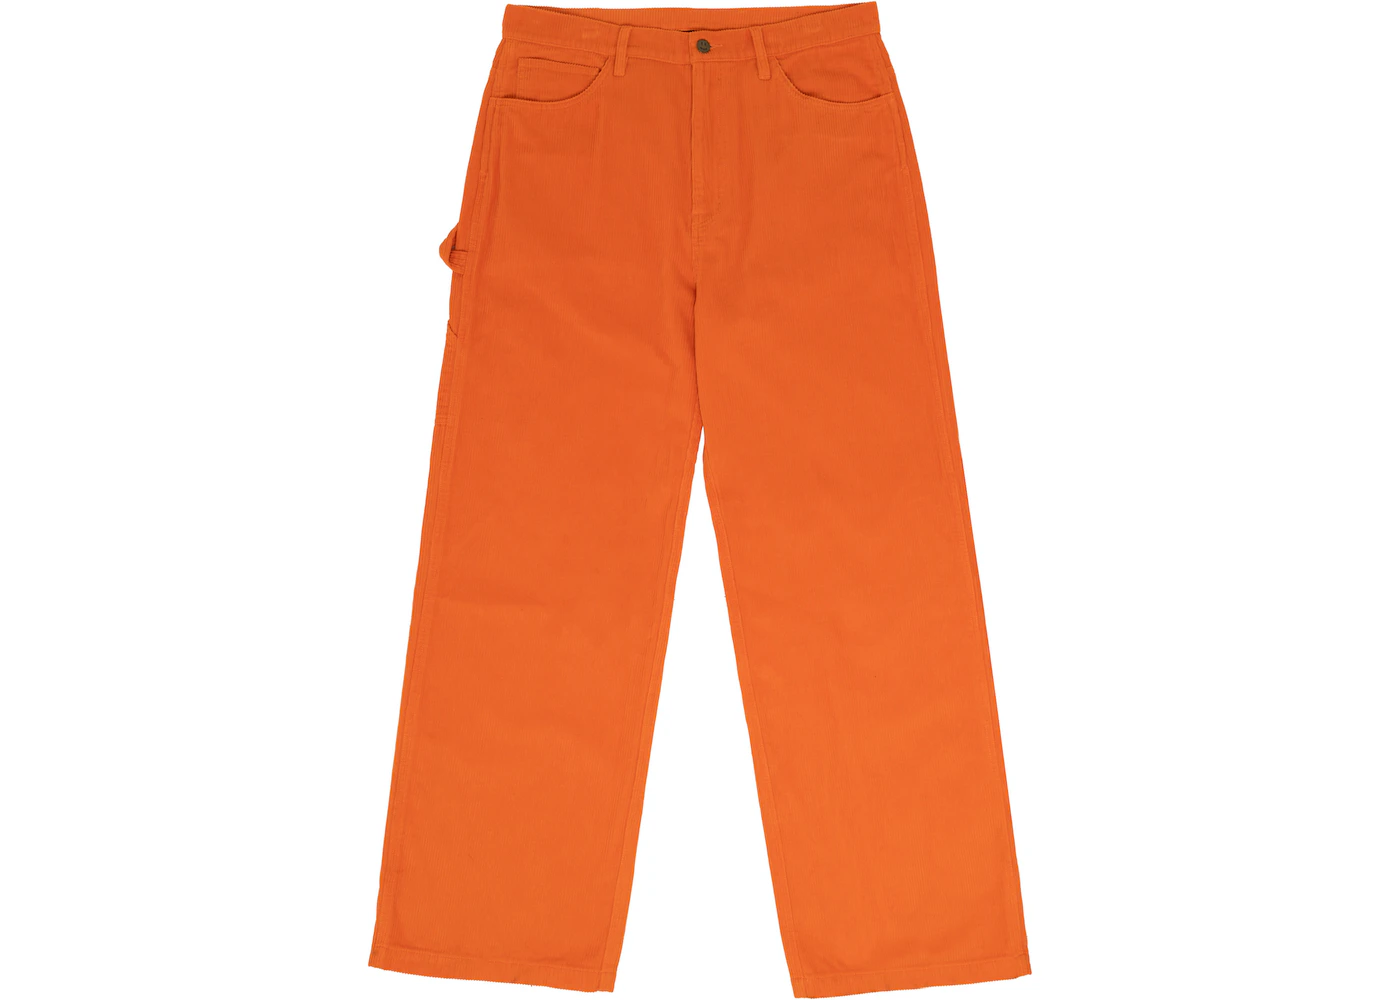 drew house corduroy carpenter pant orange Men's - FW22 - US